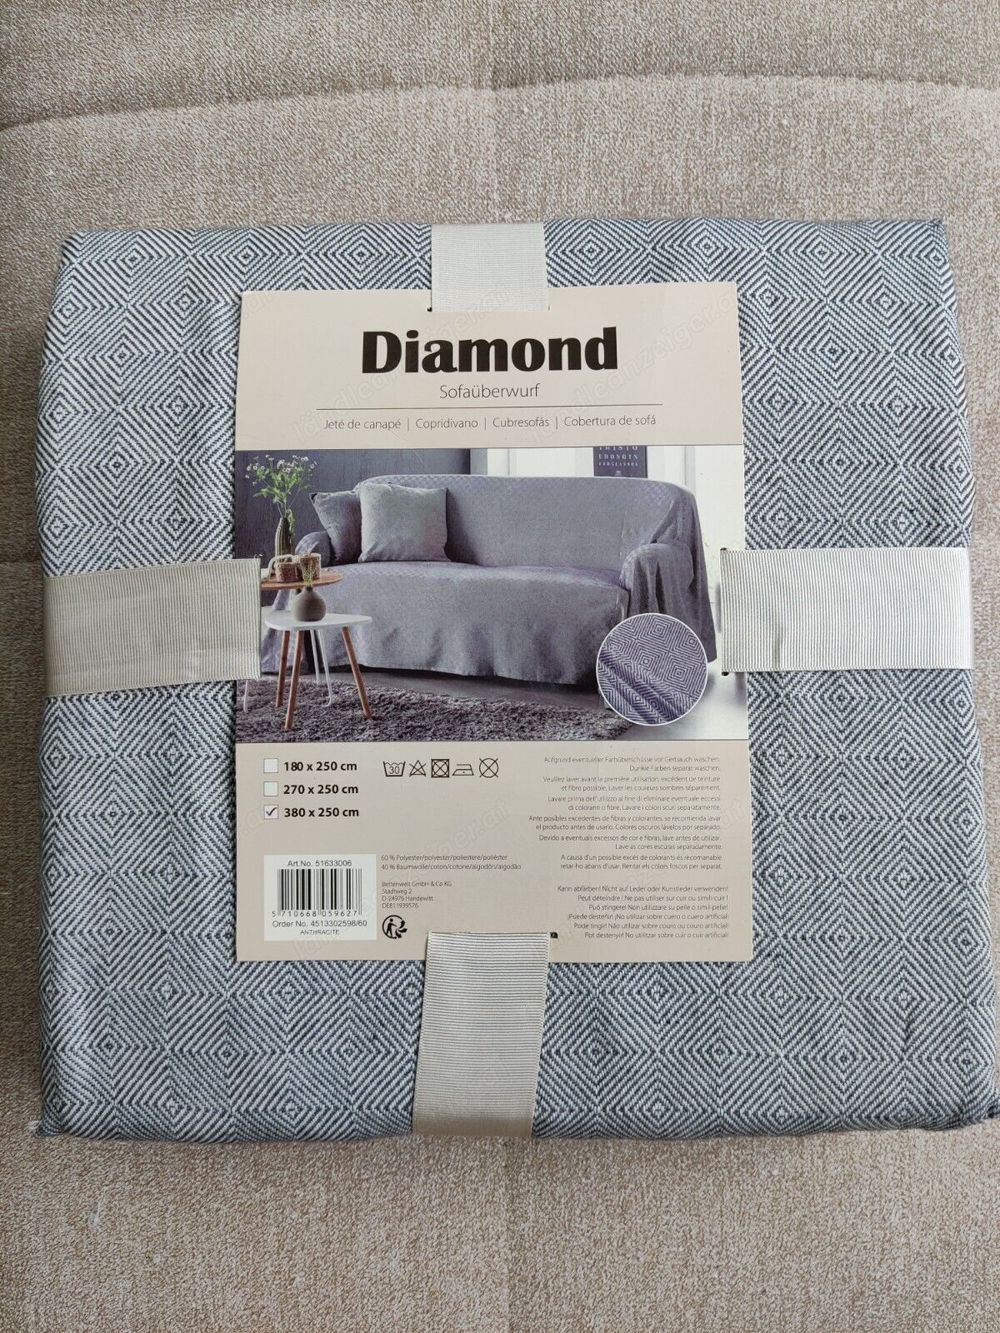 Diamond Sofaüberwurf in Anthrazit 380x250cm Neu & OVP